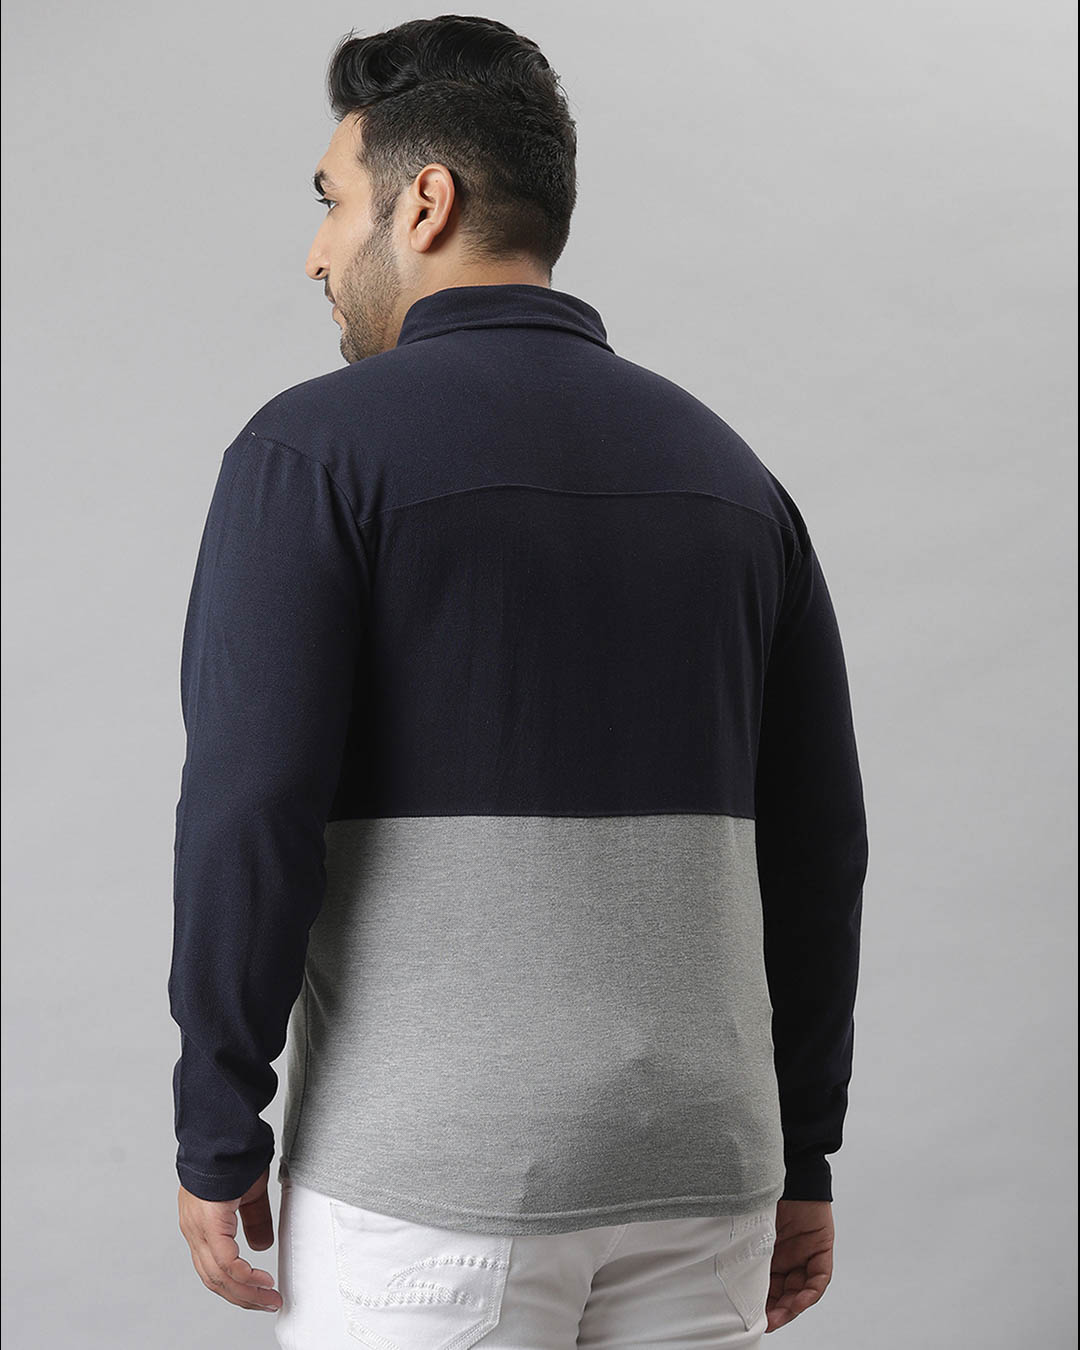 Shop Men's Blue Colorblocked Stylish Full Sleeve Casual Shirt-Back